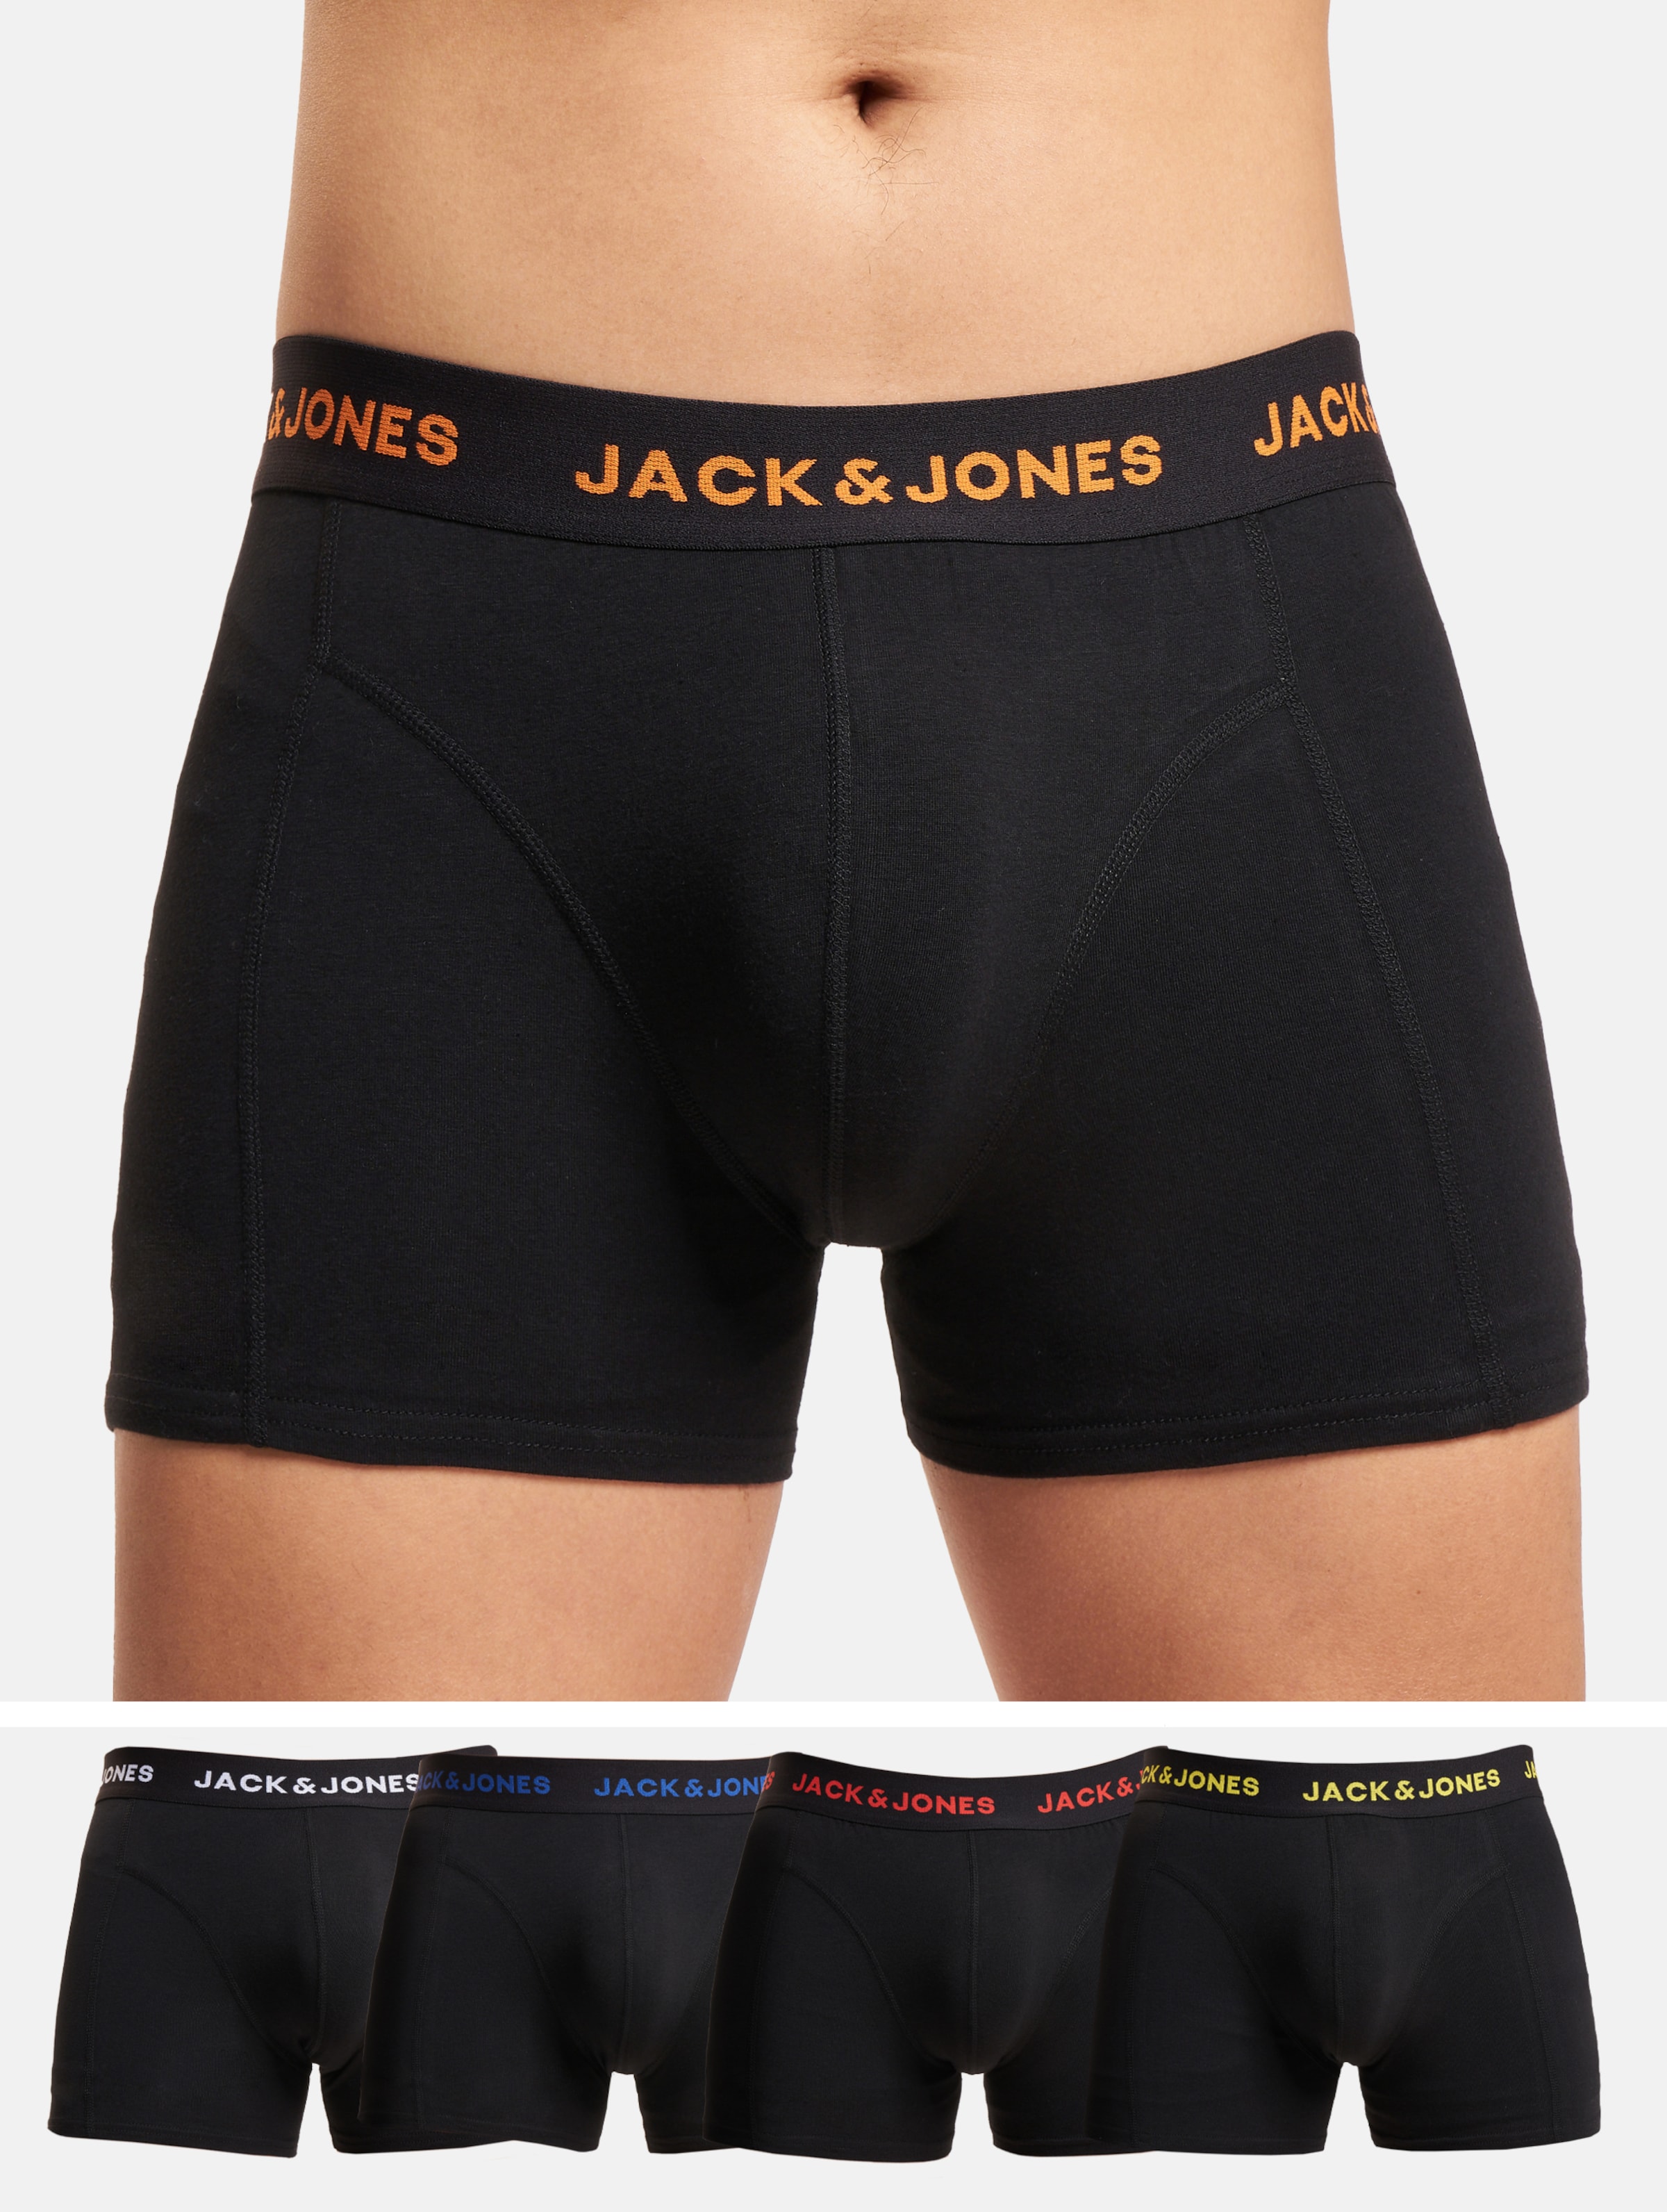 JACK&JONES JACBLACK FRIDAY TRUNKS 5 PACK BOX Heren Onderbroek - Maat L